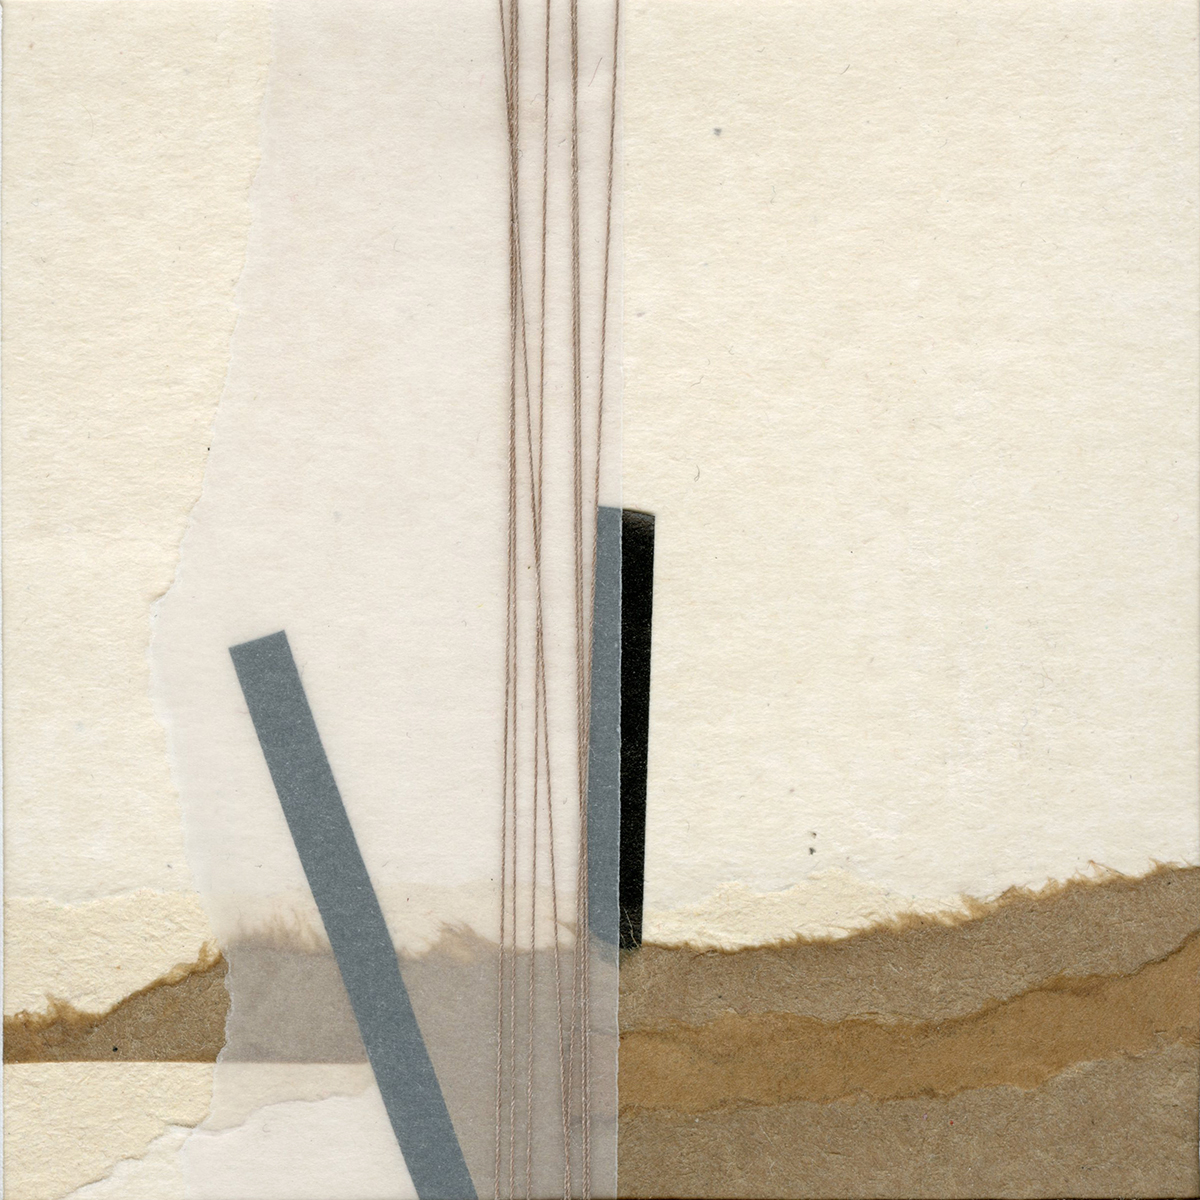 norden, 201910,5 x 10,5 cm in 30 x 30 cmPapercollage; framed